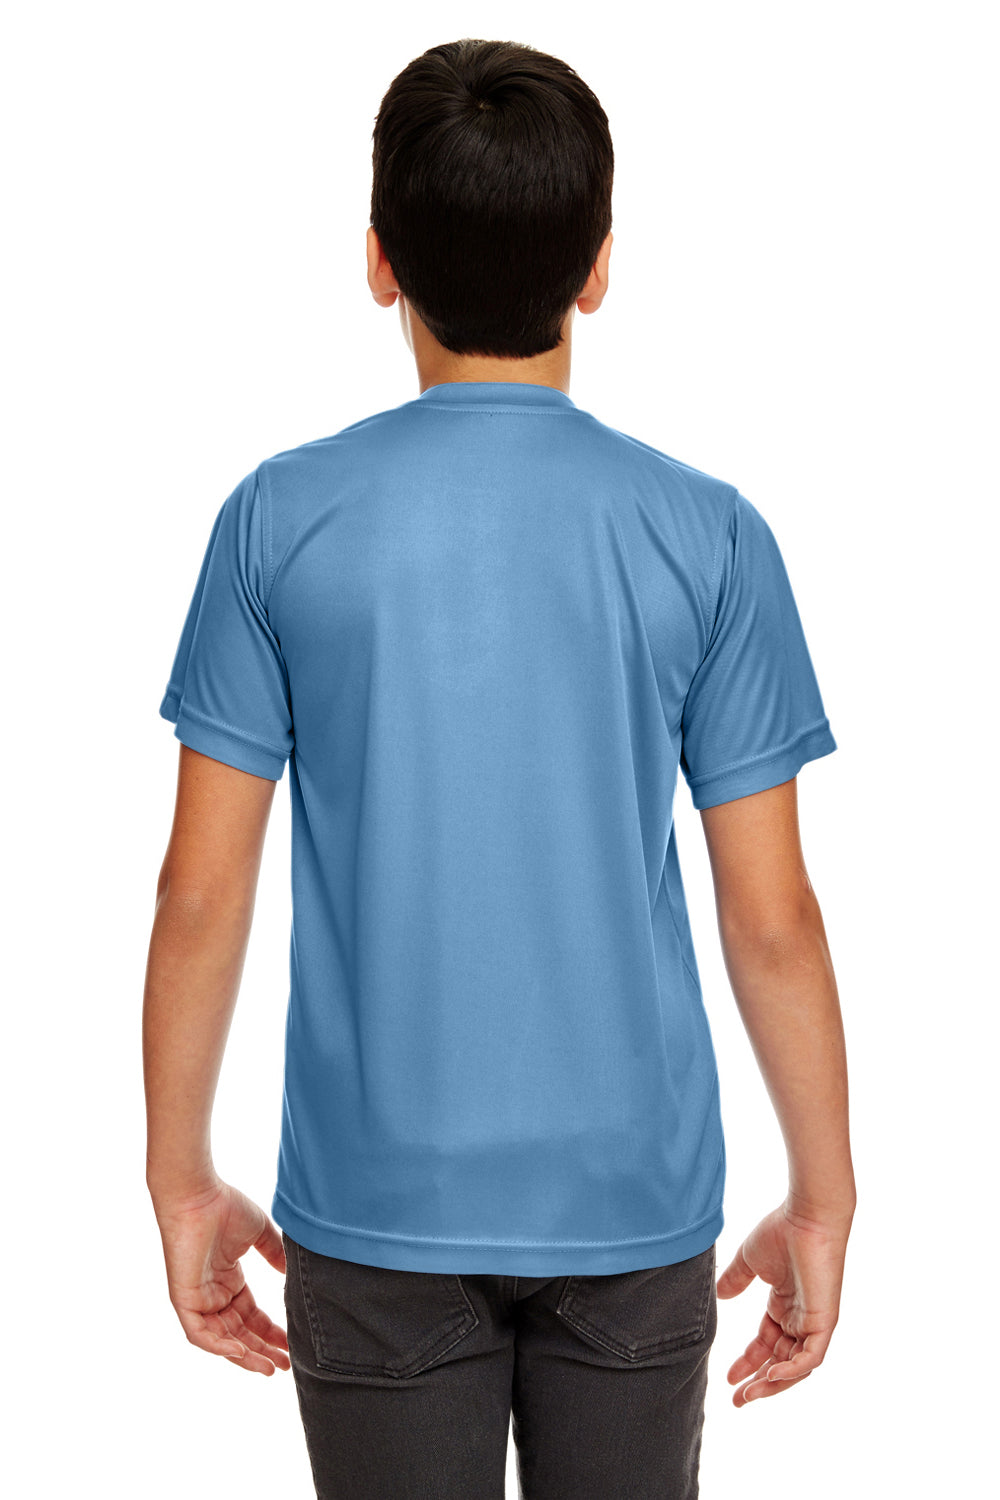 UltraClub 8420Y Youth Cool & Dry Performance Moisture Wicking Short Sleeve Crewneck T-Shirt Indigo Blue Back